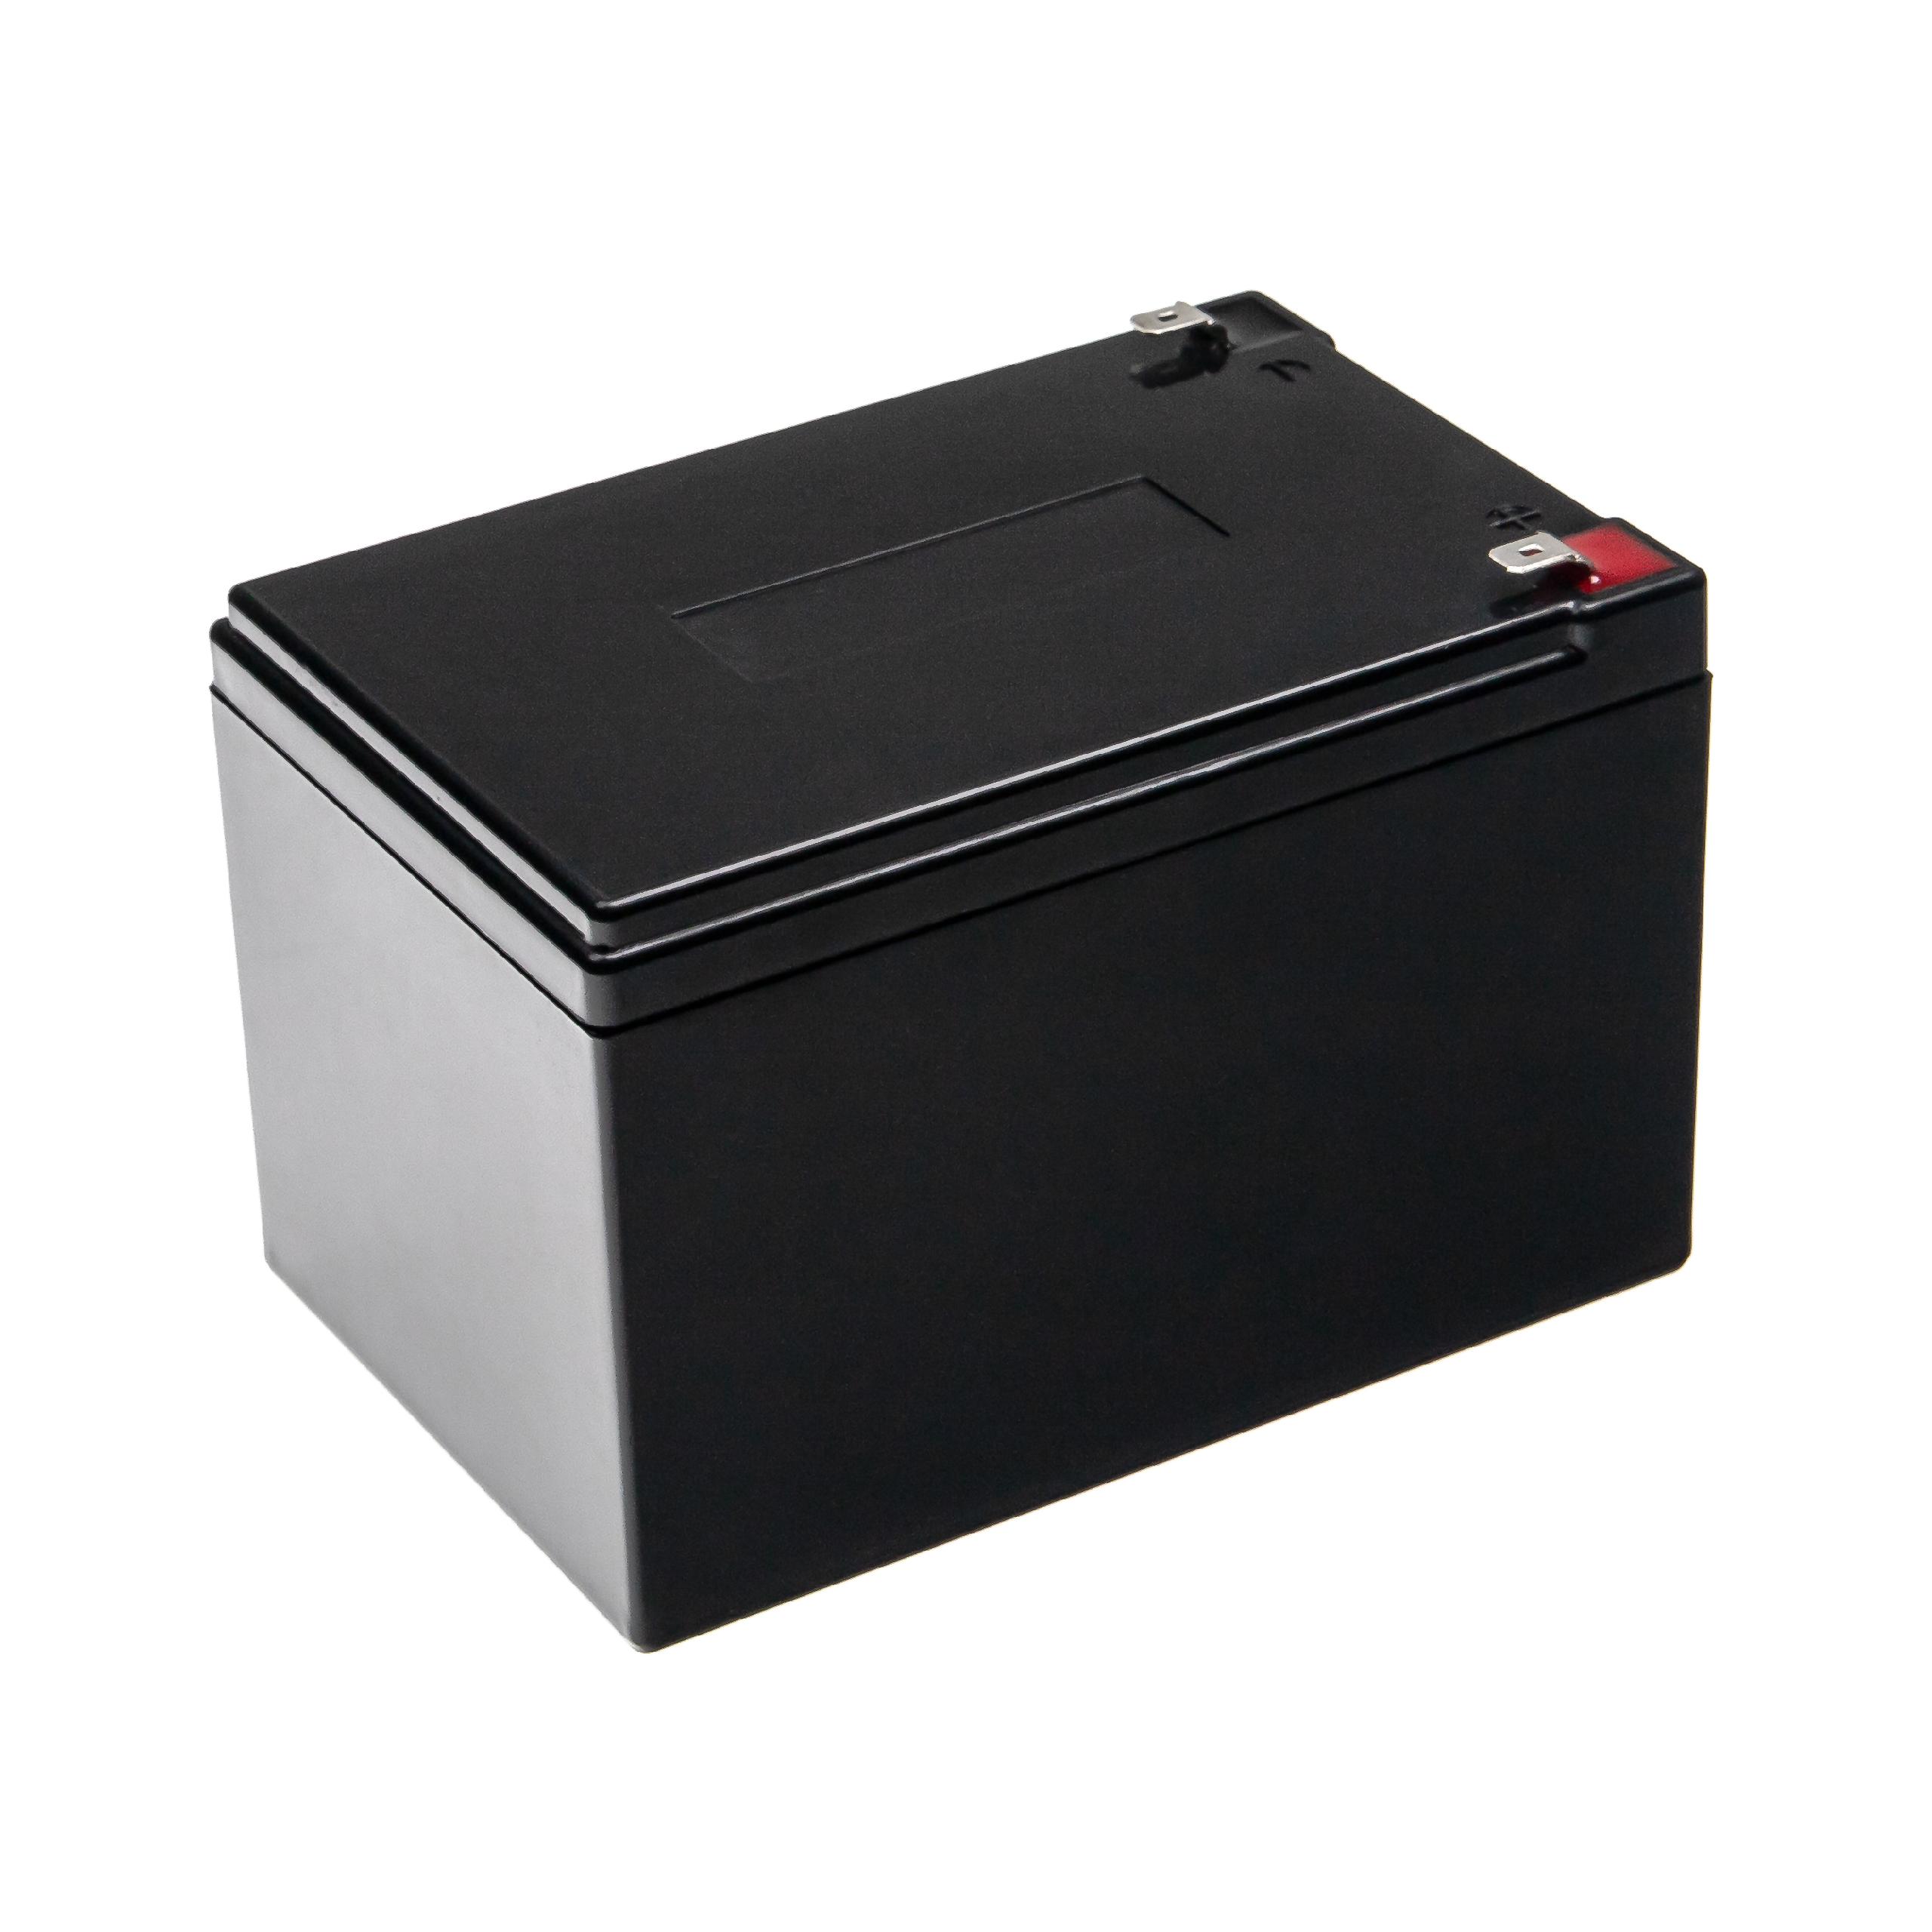 Bordbatterie Akku passend für Wohnmobil, Boot, Solaranlage - 12 Ah 12,8V LiFePO4, 12000mAh, schwarz